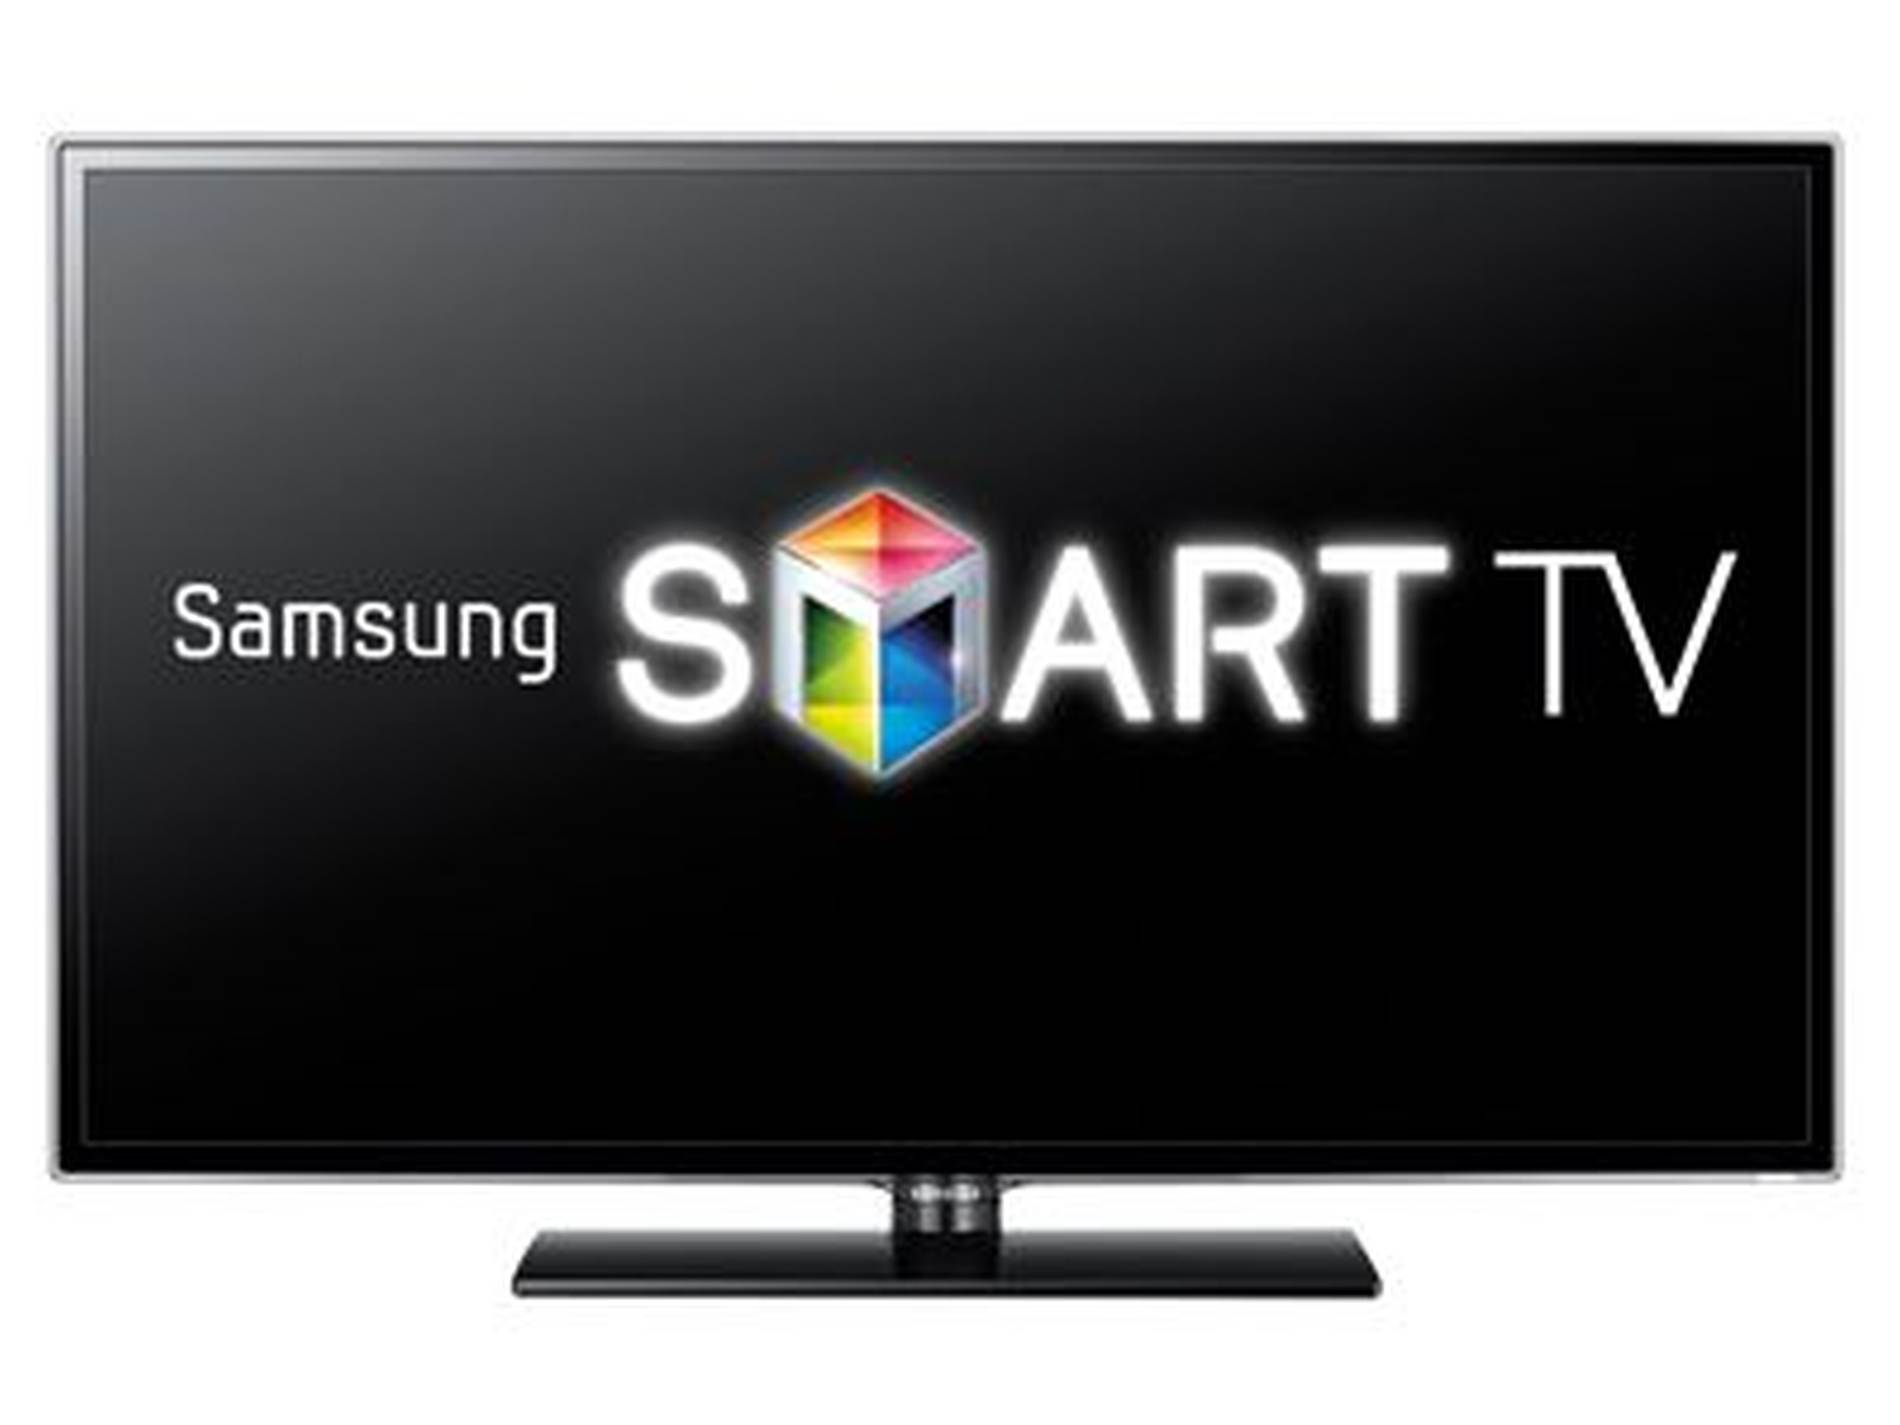 Работа телевизора самсунг. Samsung Smart TV. Смарт телевизор. Smart TV телевизор. Телевизор самсунг смарт.